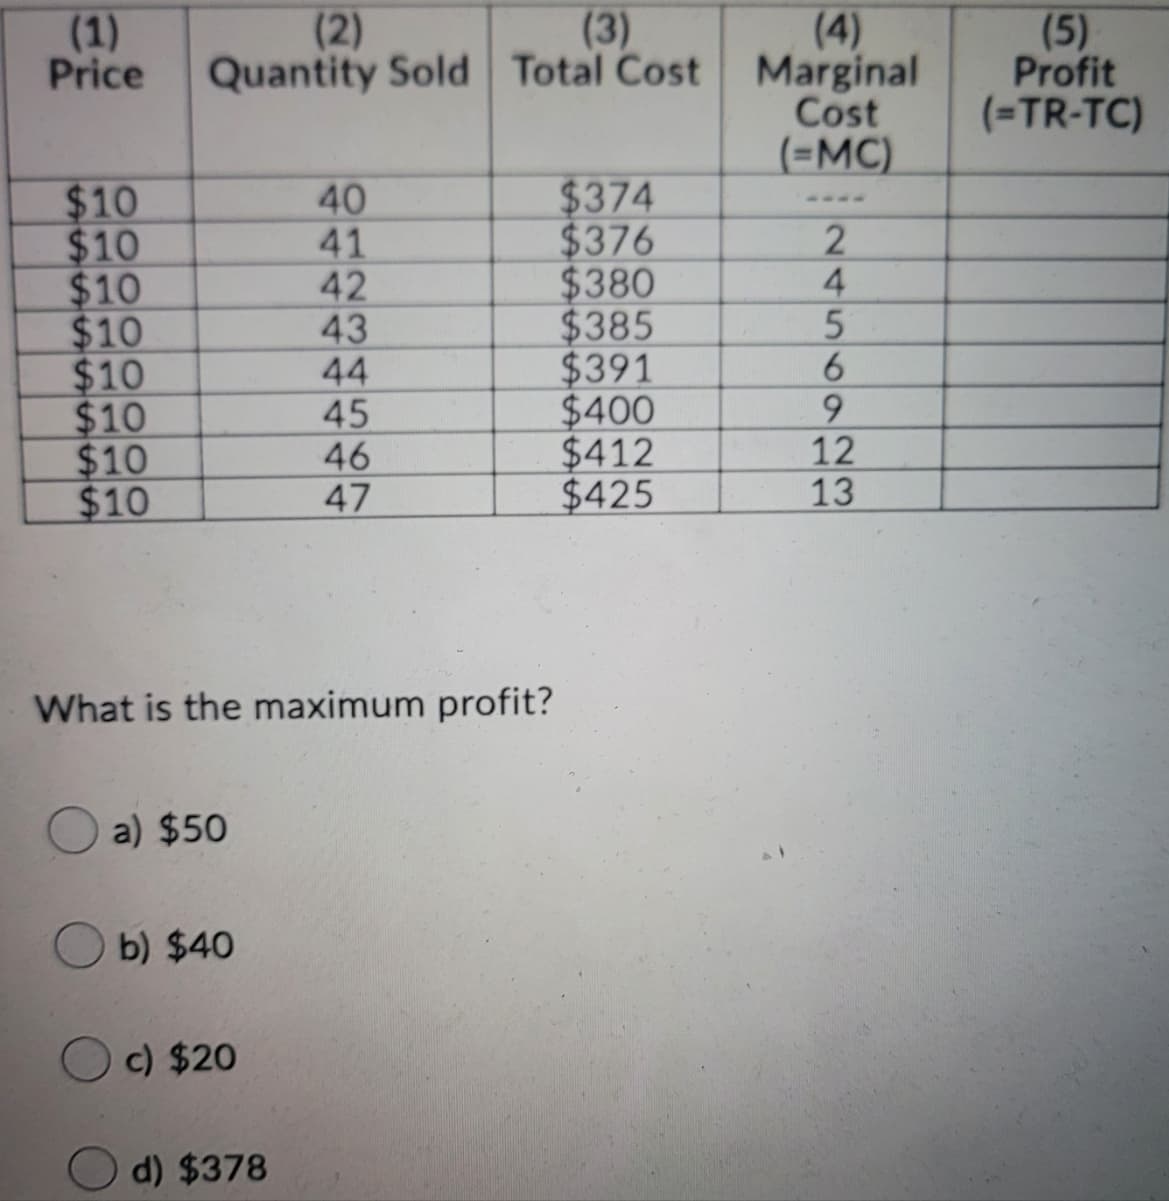 (3)
(2)
Quantity Sold Total Cost
(4)
Marginal
Cost
(=MC)
(1)
Price
(5)
Profit
(=TR-TC)
$10
$10
$10
$10
$10
$10
$10
$10
40
41
42
43
44
45
46
47
$374
$376
$380
$385
$391
$400
$412
$425
.---
2
4
6.
6.
12
13
What is the maximum profit?
a) $50
b) $40
c) $20
d) $378
